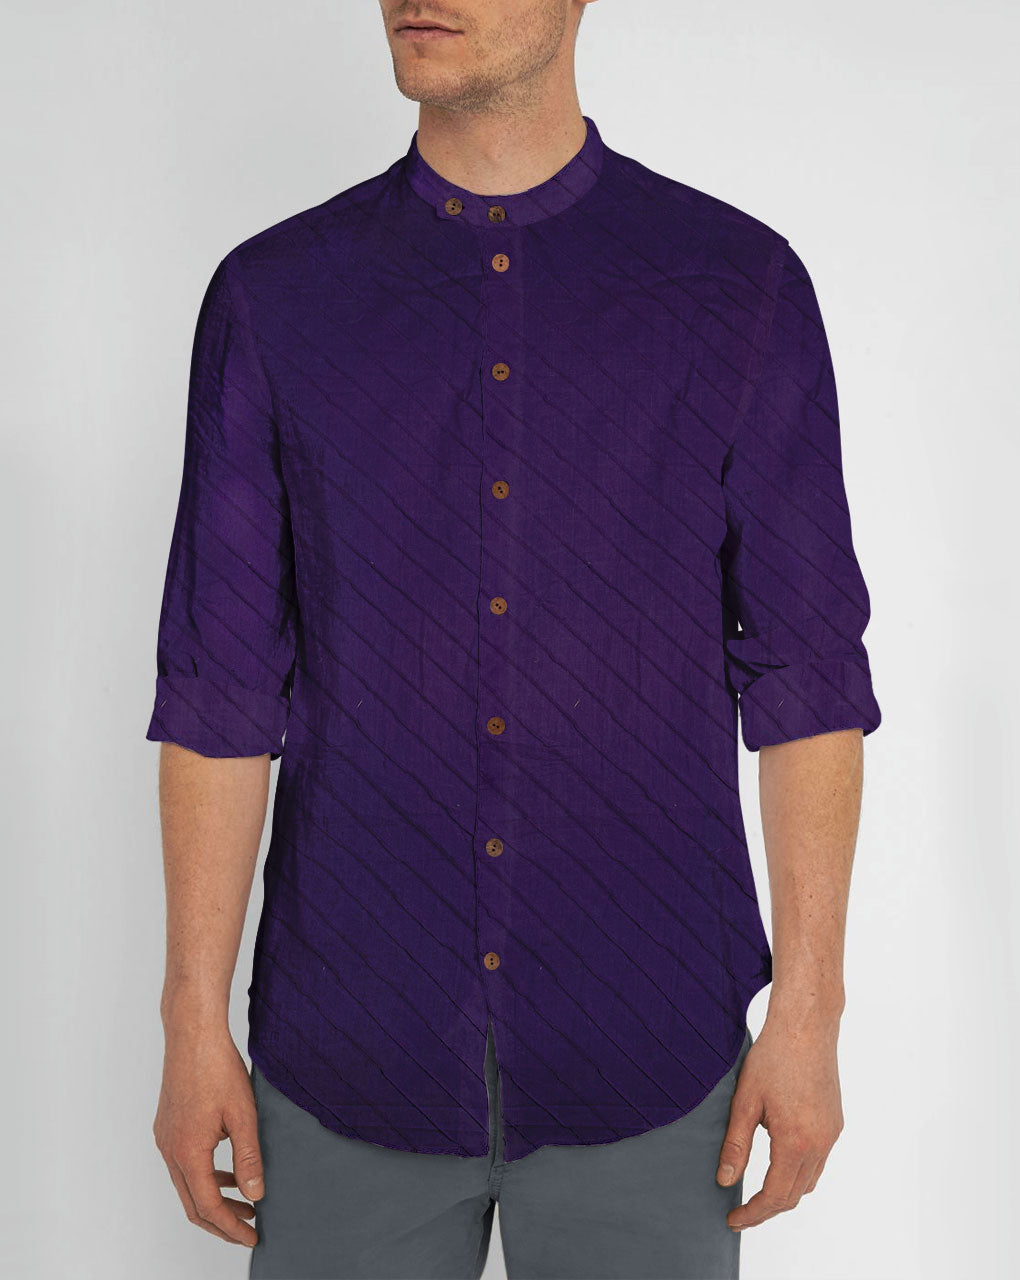 Dark Purple Stripes Pin-Tucks Cotton Fabric ( Width 40 Inch ) - Fabriclore.com